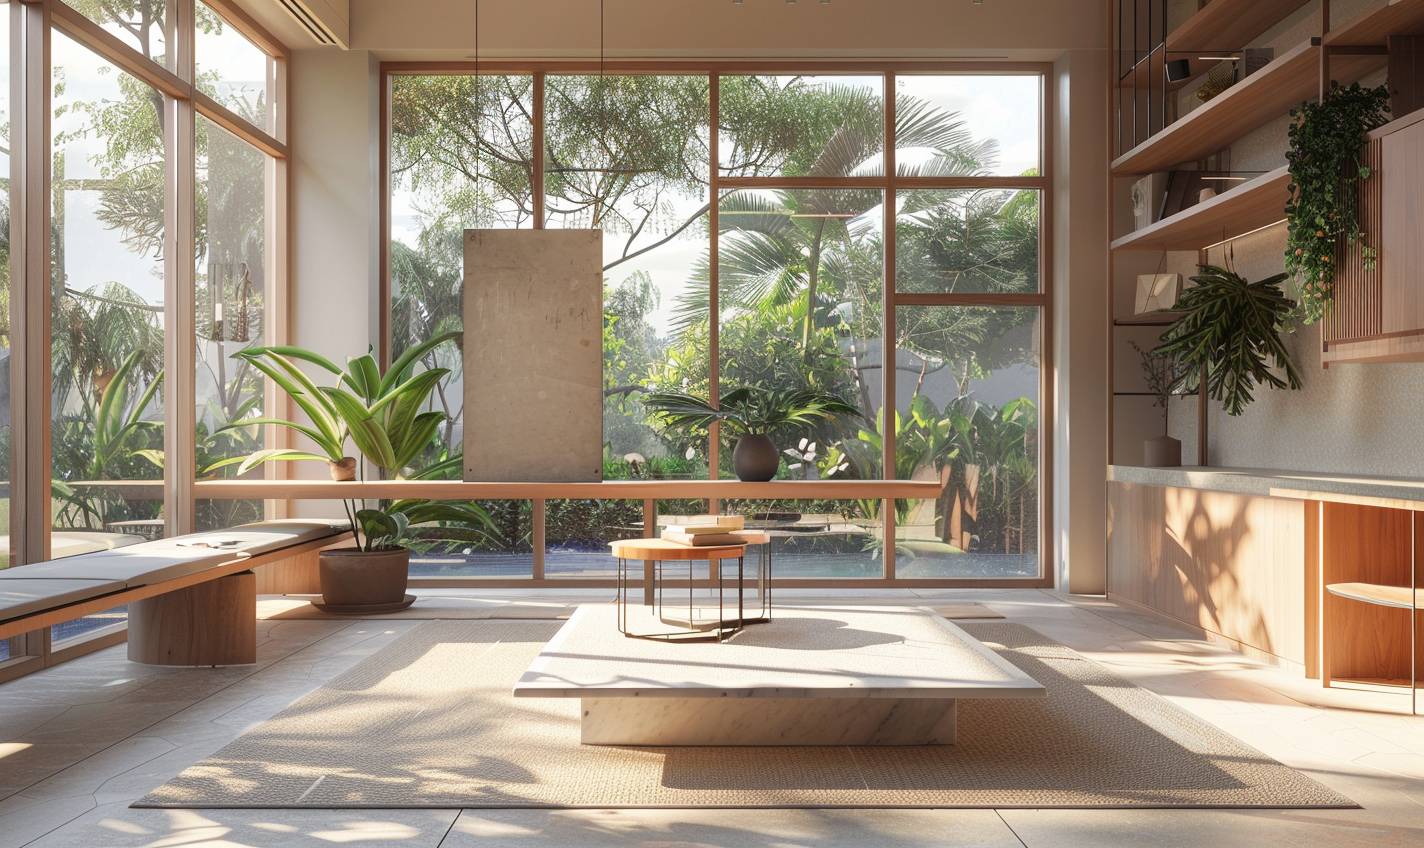 Interior Design, a perspective of study, modernist, large windows with abundant natural light, light colors, plants, modern furniture, modern interior design